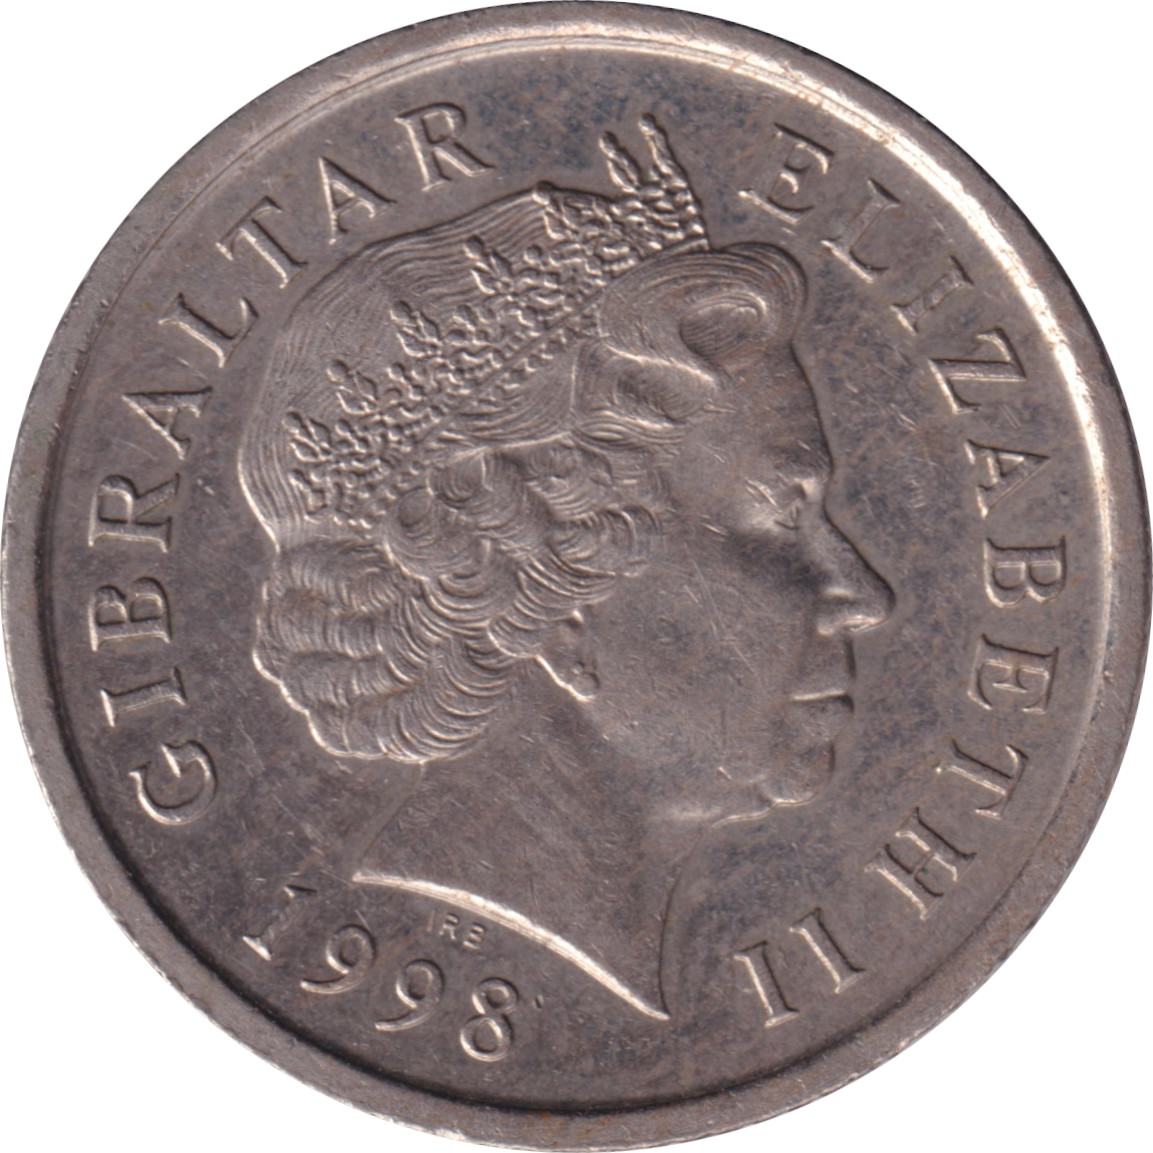 10 pence - Elizabeth II - Old head